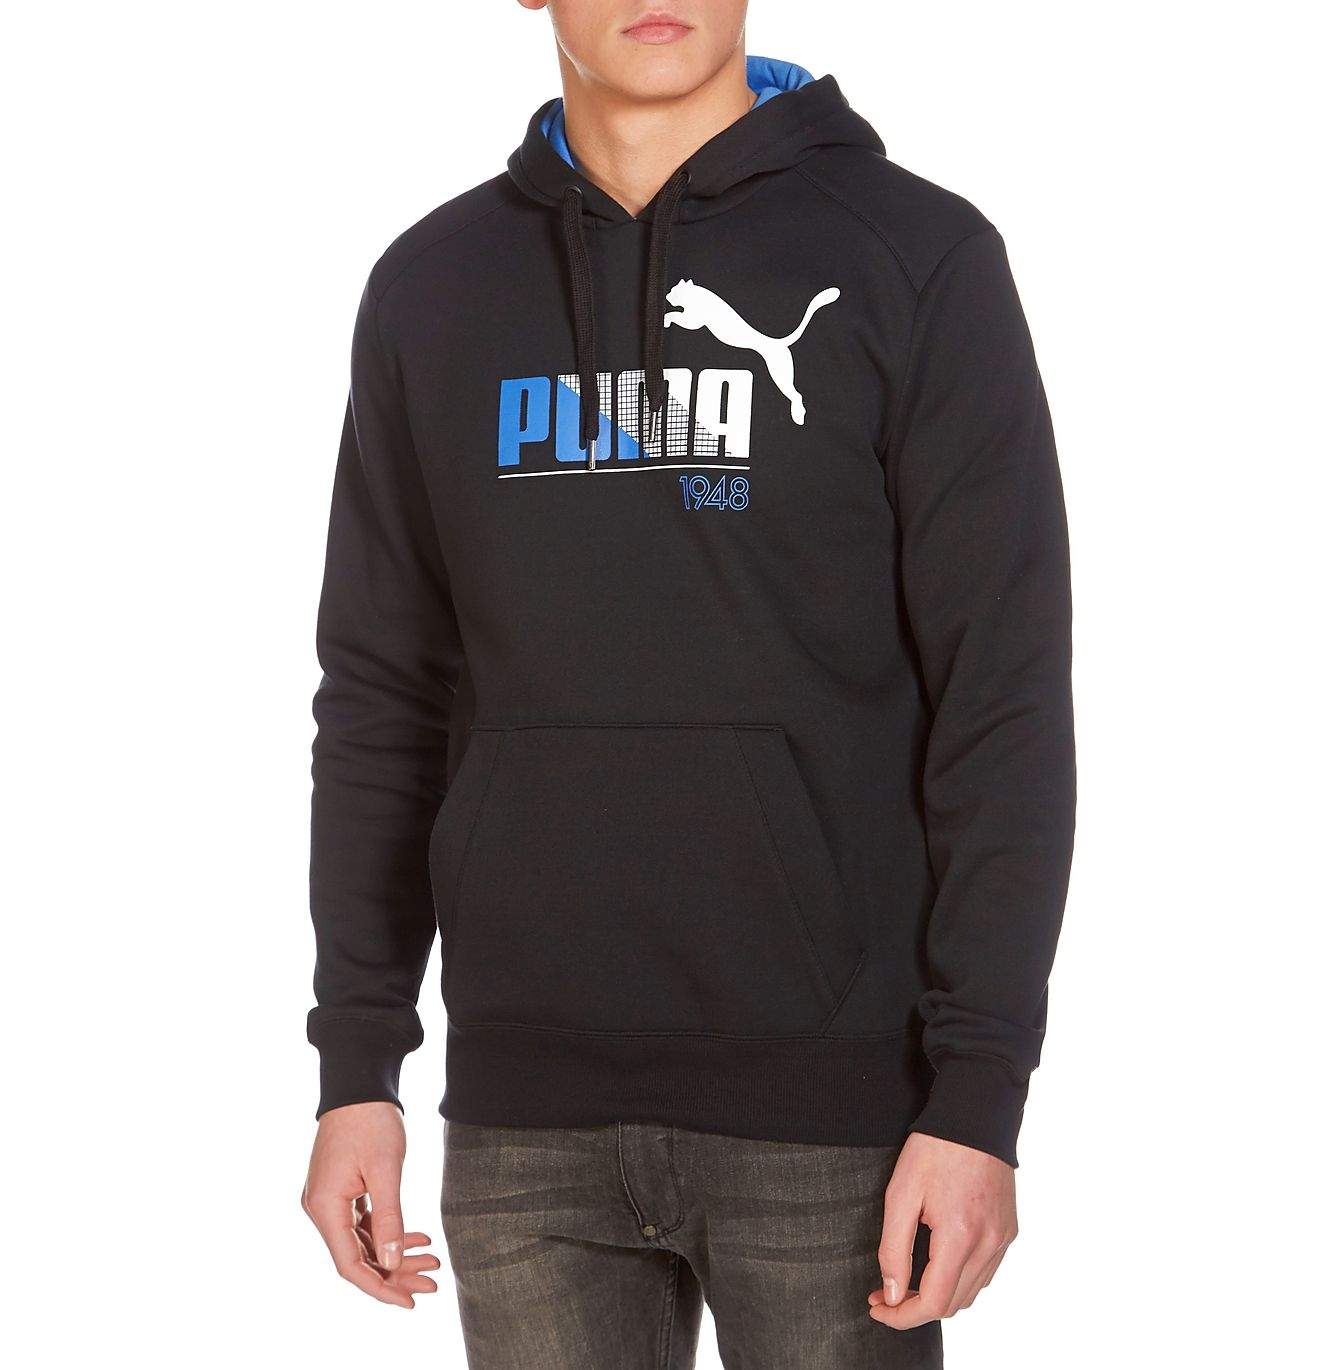 puma mens black sweatshirt